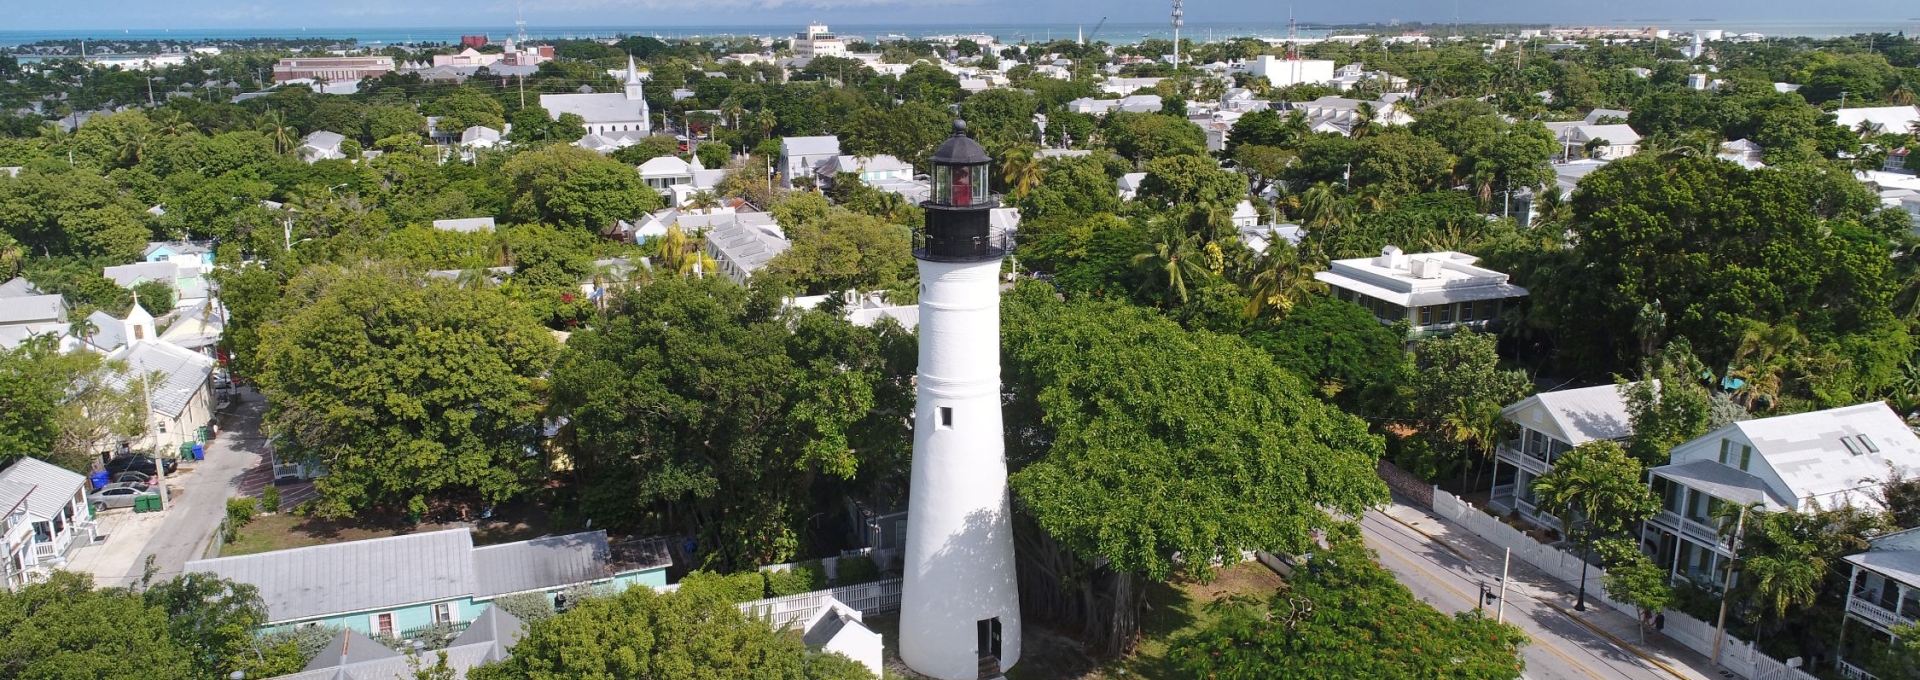 The historic Key West lighthouse